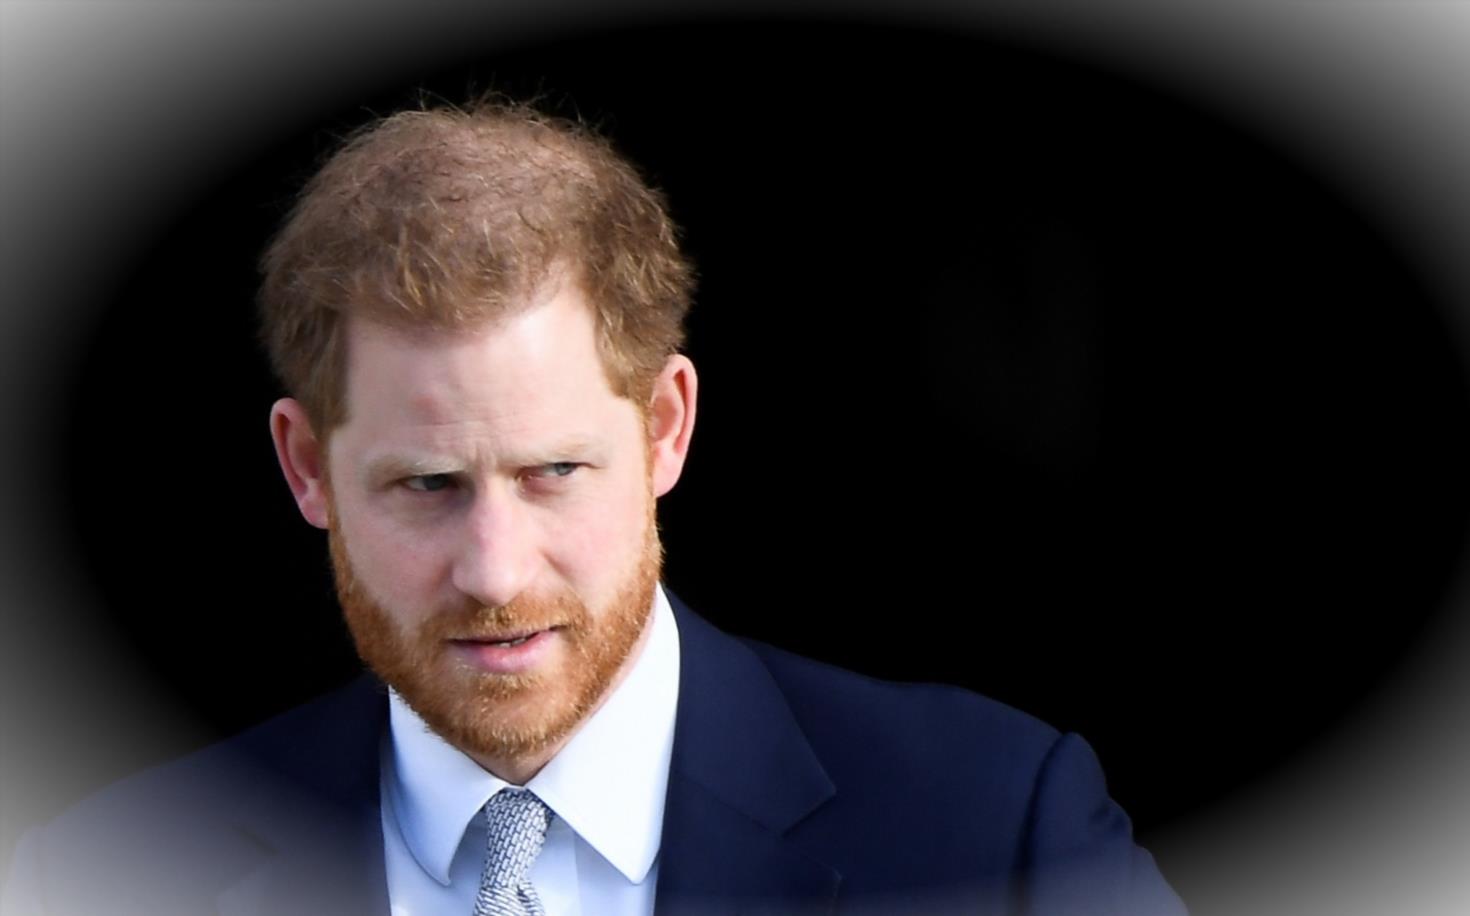 Prince Harrys Unexpected London Appearance Bolsters CoronationgcO6P5Ftr 5